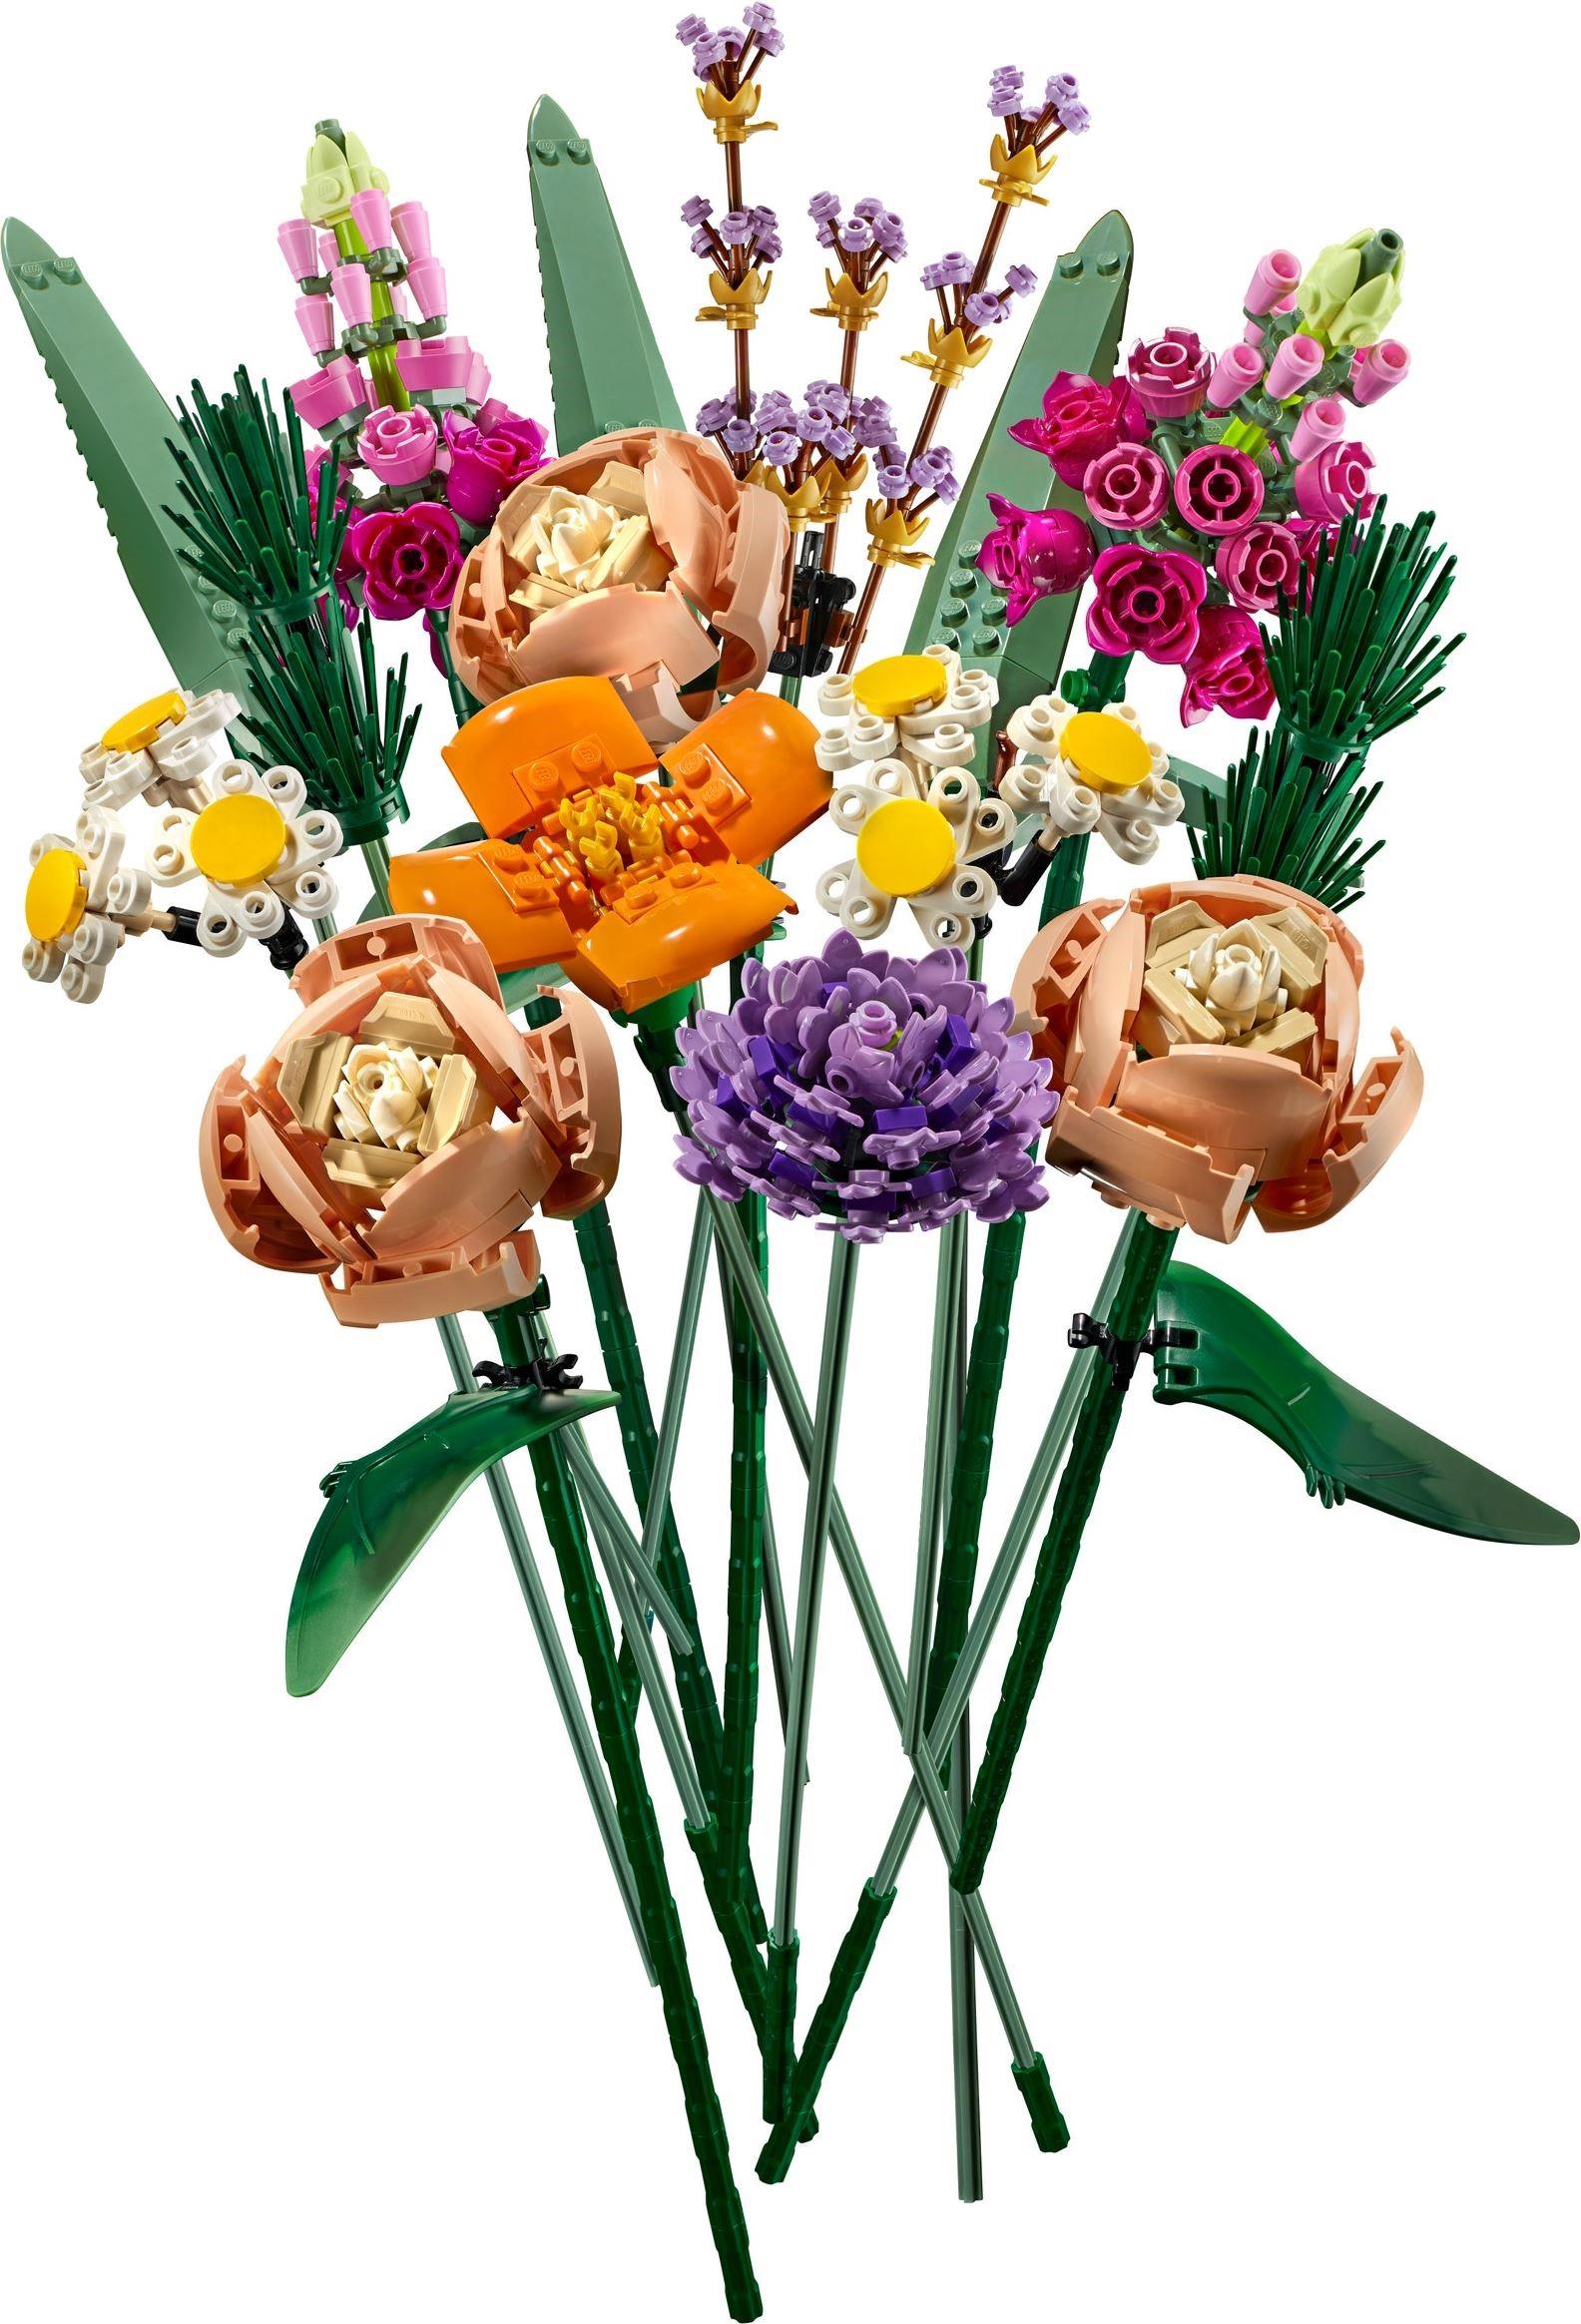 Neu und OVP Lego® Creator Expert Botanical Collection Flower Bouquet 10280 